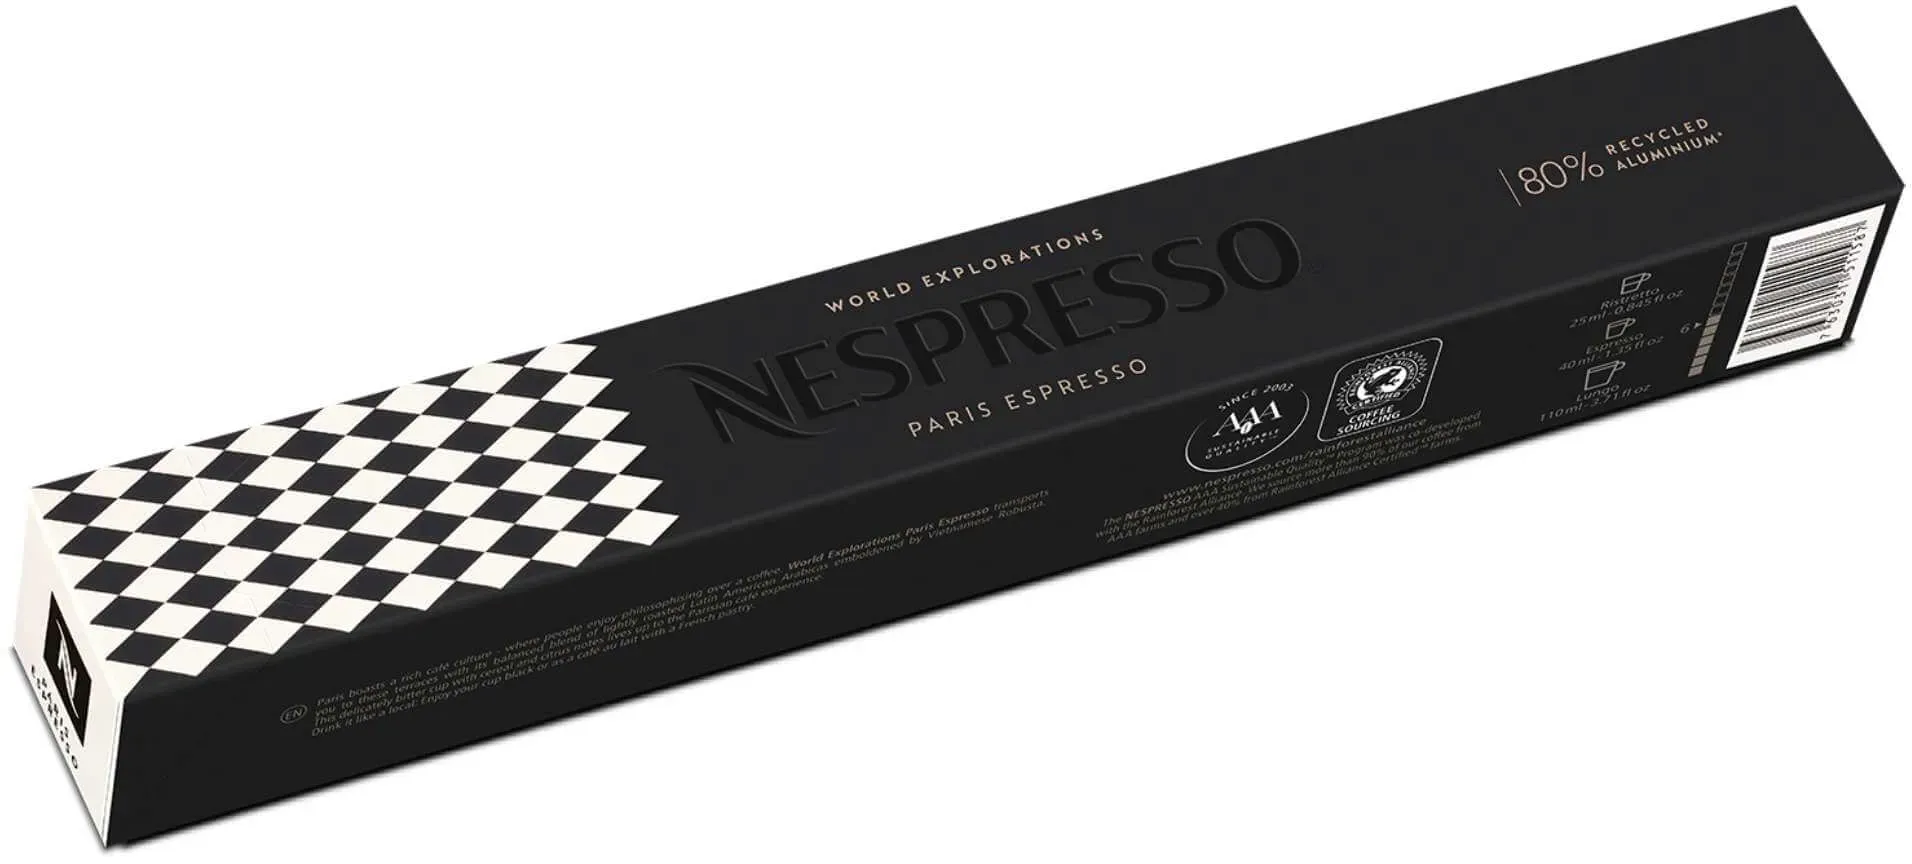 Nespresso Paris Espresso Original Line 10 Espresso Kaffeekapseln Schwarz/Weiß 40 ml Getreide- & Gebäckaroma mit Zitrusnote